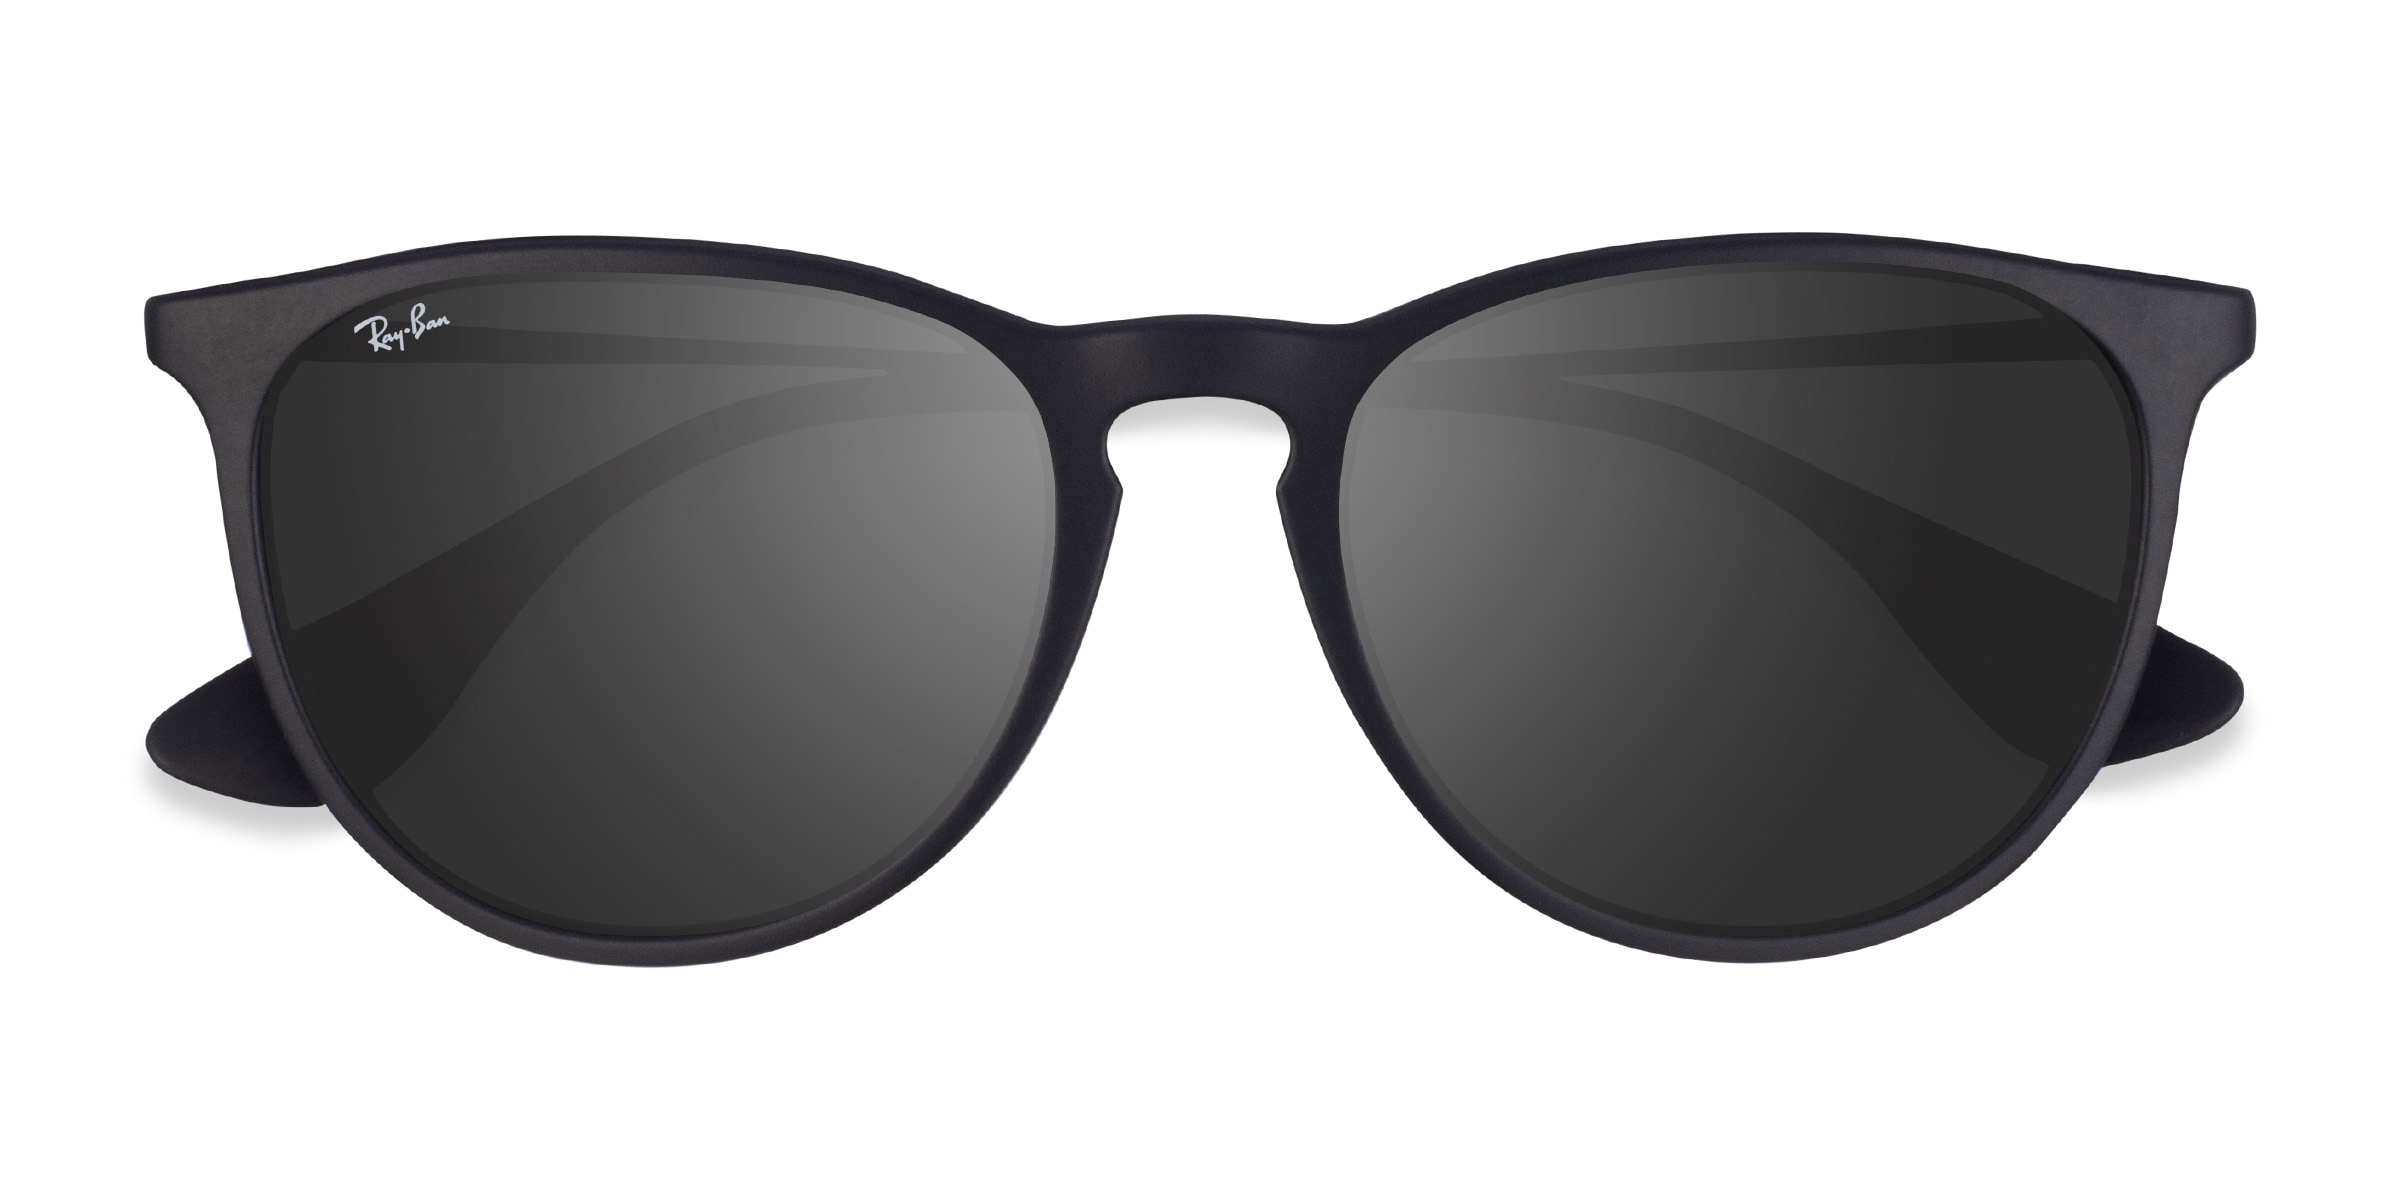 Ray-Ban RB4171 Erika - Oval Black Frame Sunglasses For Women 